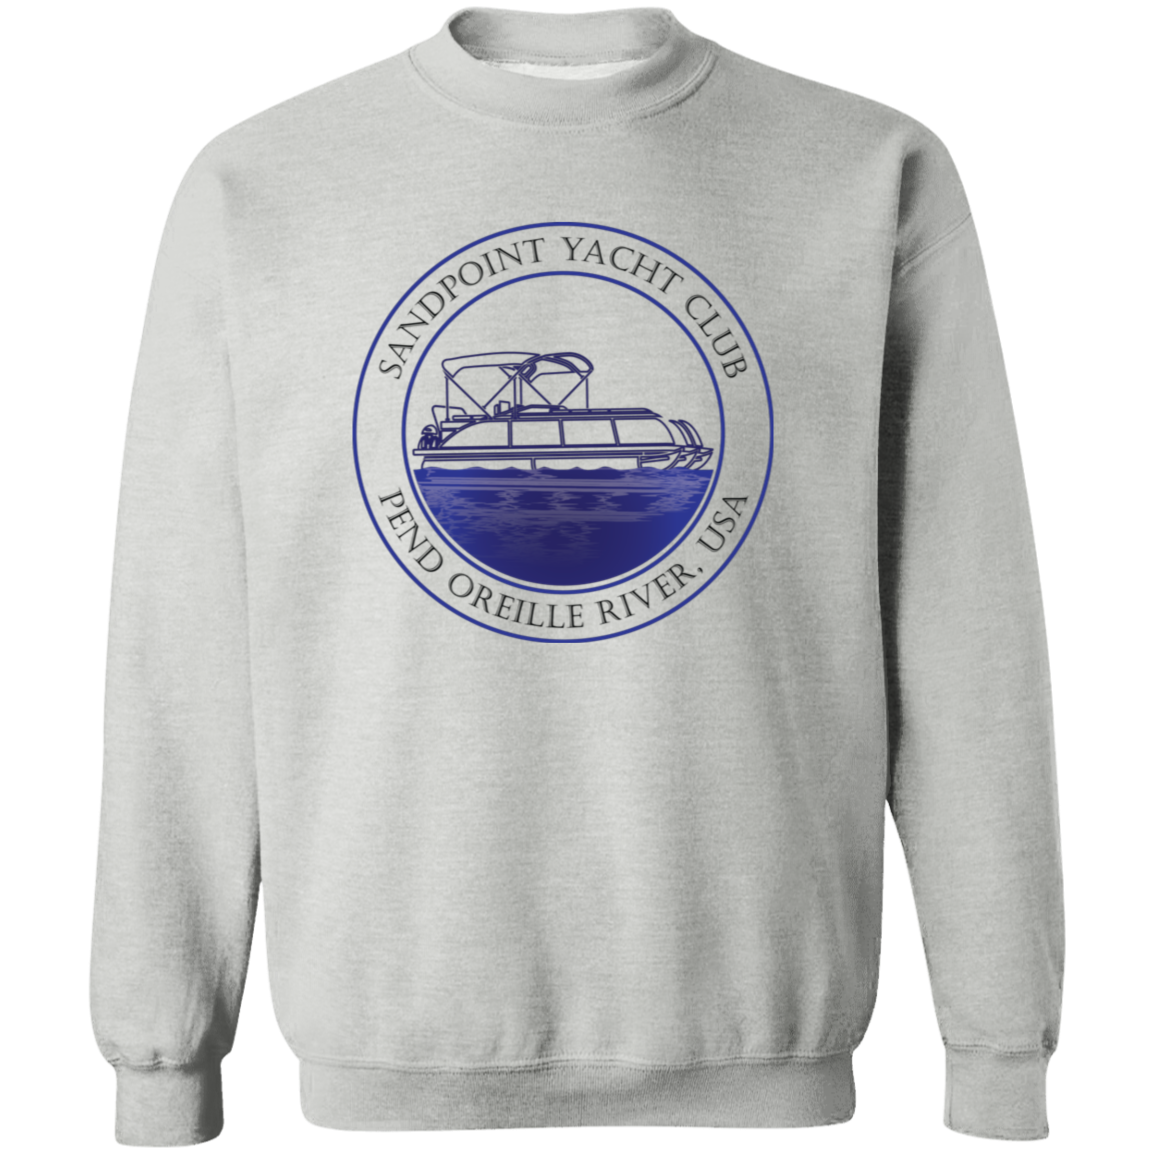 Sandpoint Yacht Club - Sweatshirt